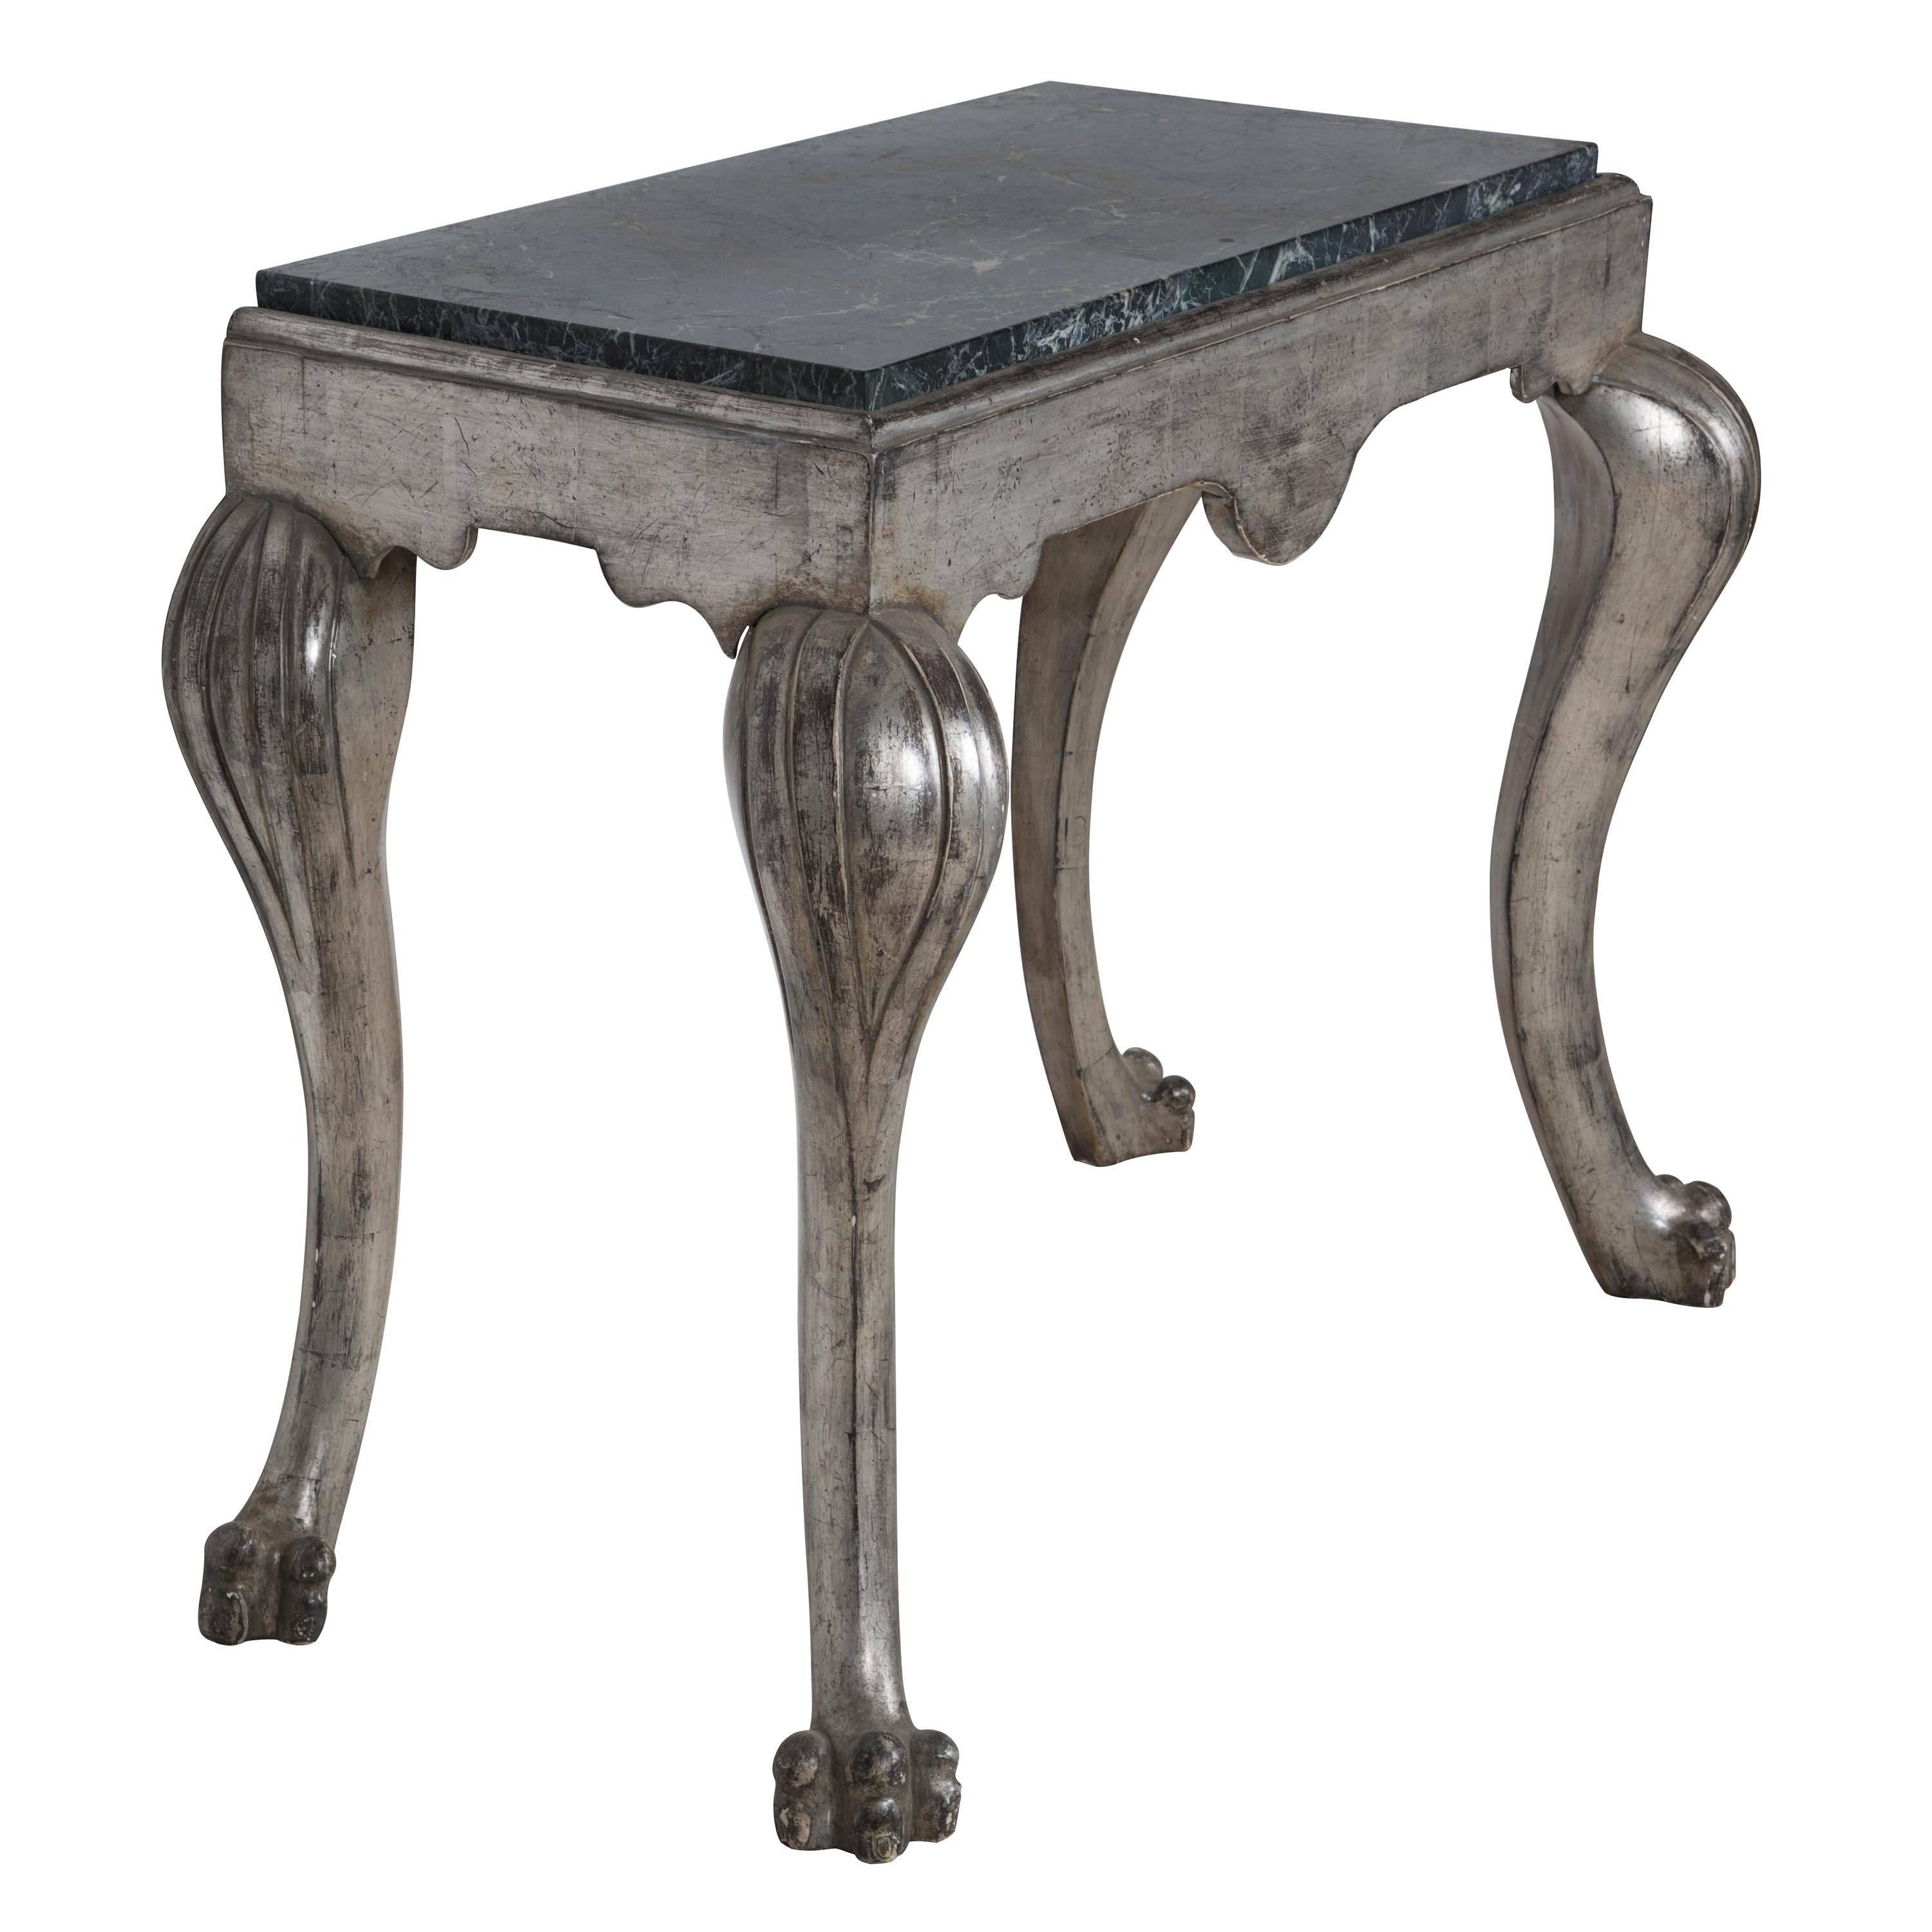 19th century Italian green marble top console table on silver gilt cab leg base.